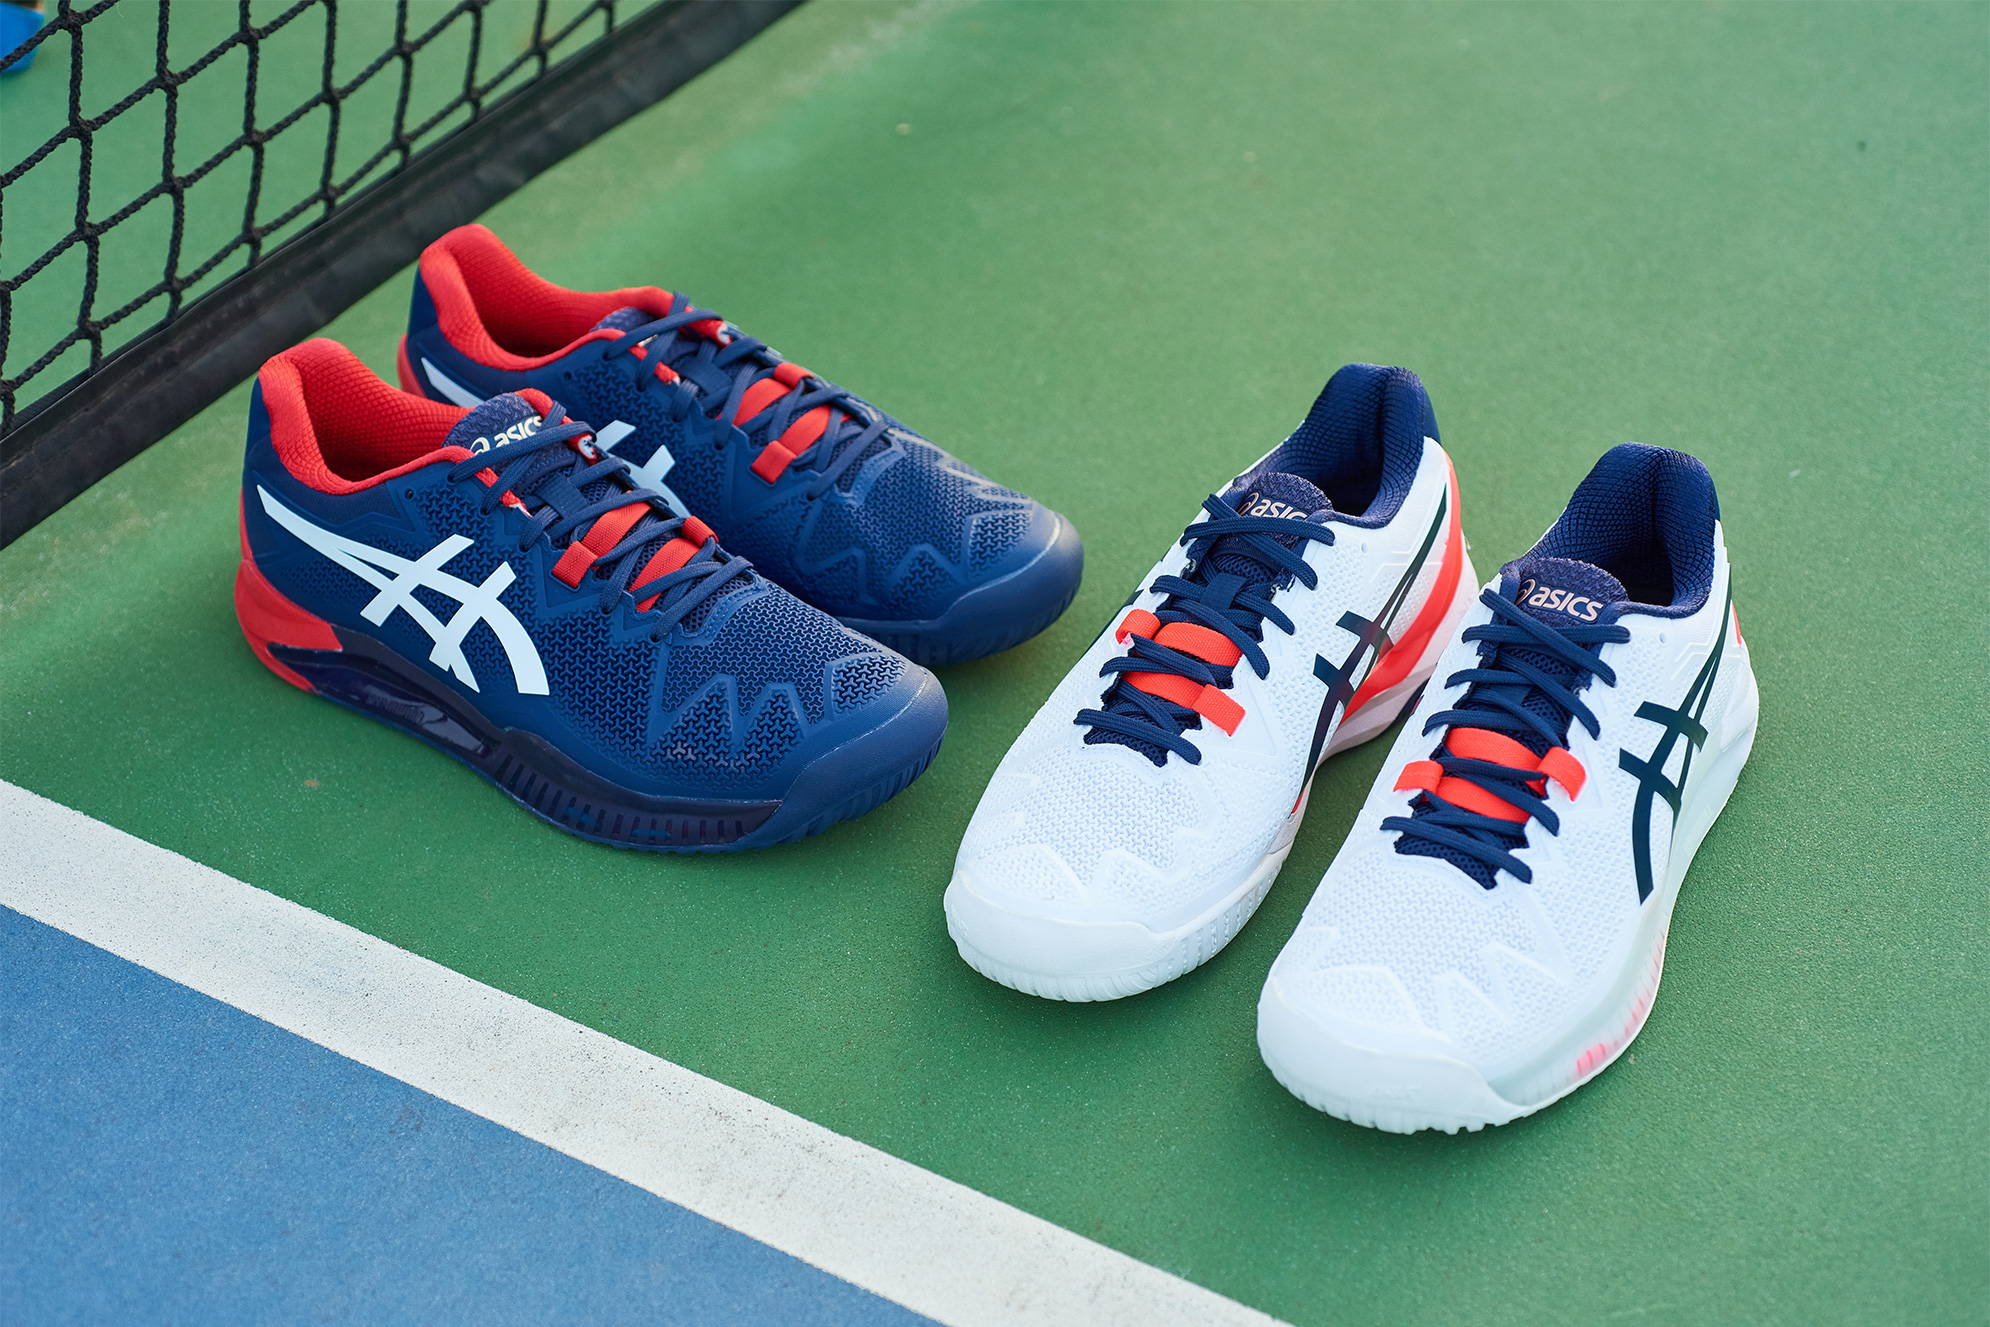 Introducing ASICS GEL-Resolution 8 Tennis Shoes – Holabird Sports